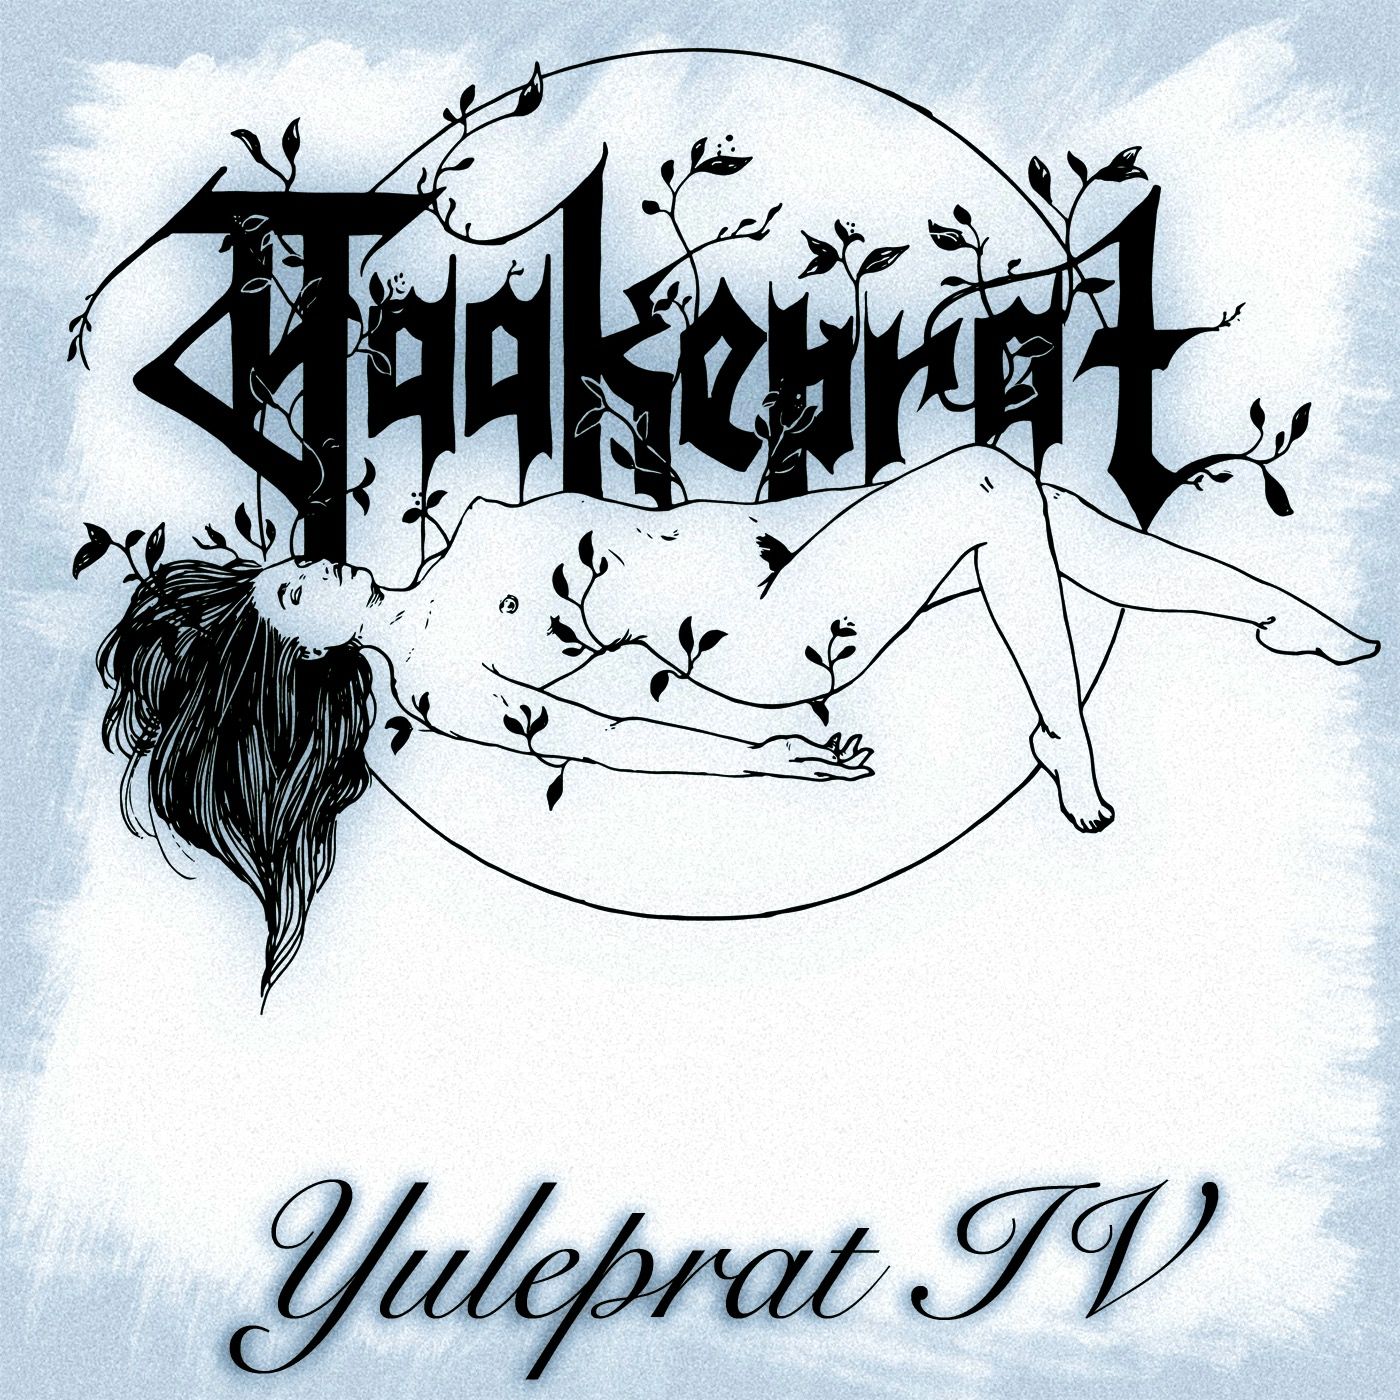 Episode 150 - Yuleprat IV